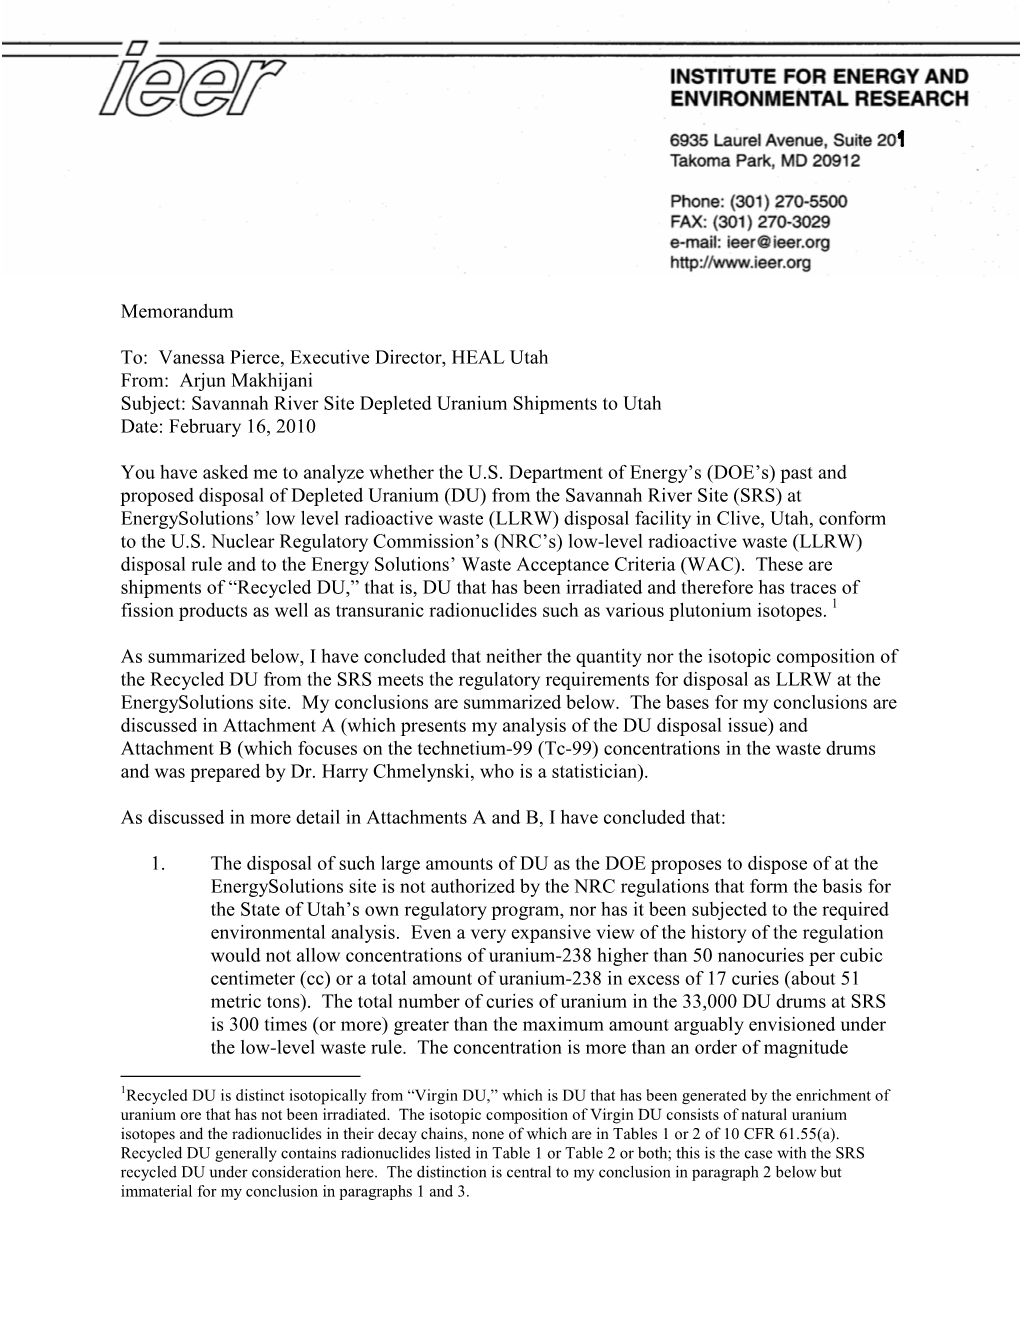 Arjun Makhijani Subject: Savannah River Site Depleted Uranium Shipments to Utah Date: February 16, 2010